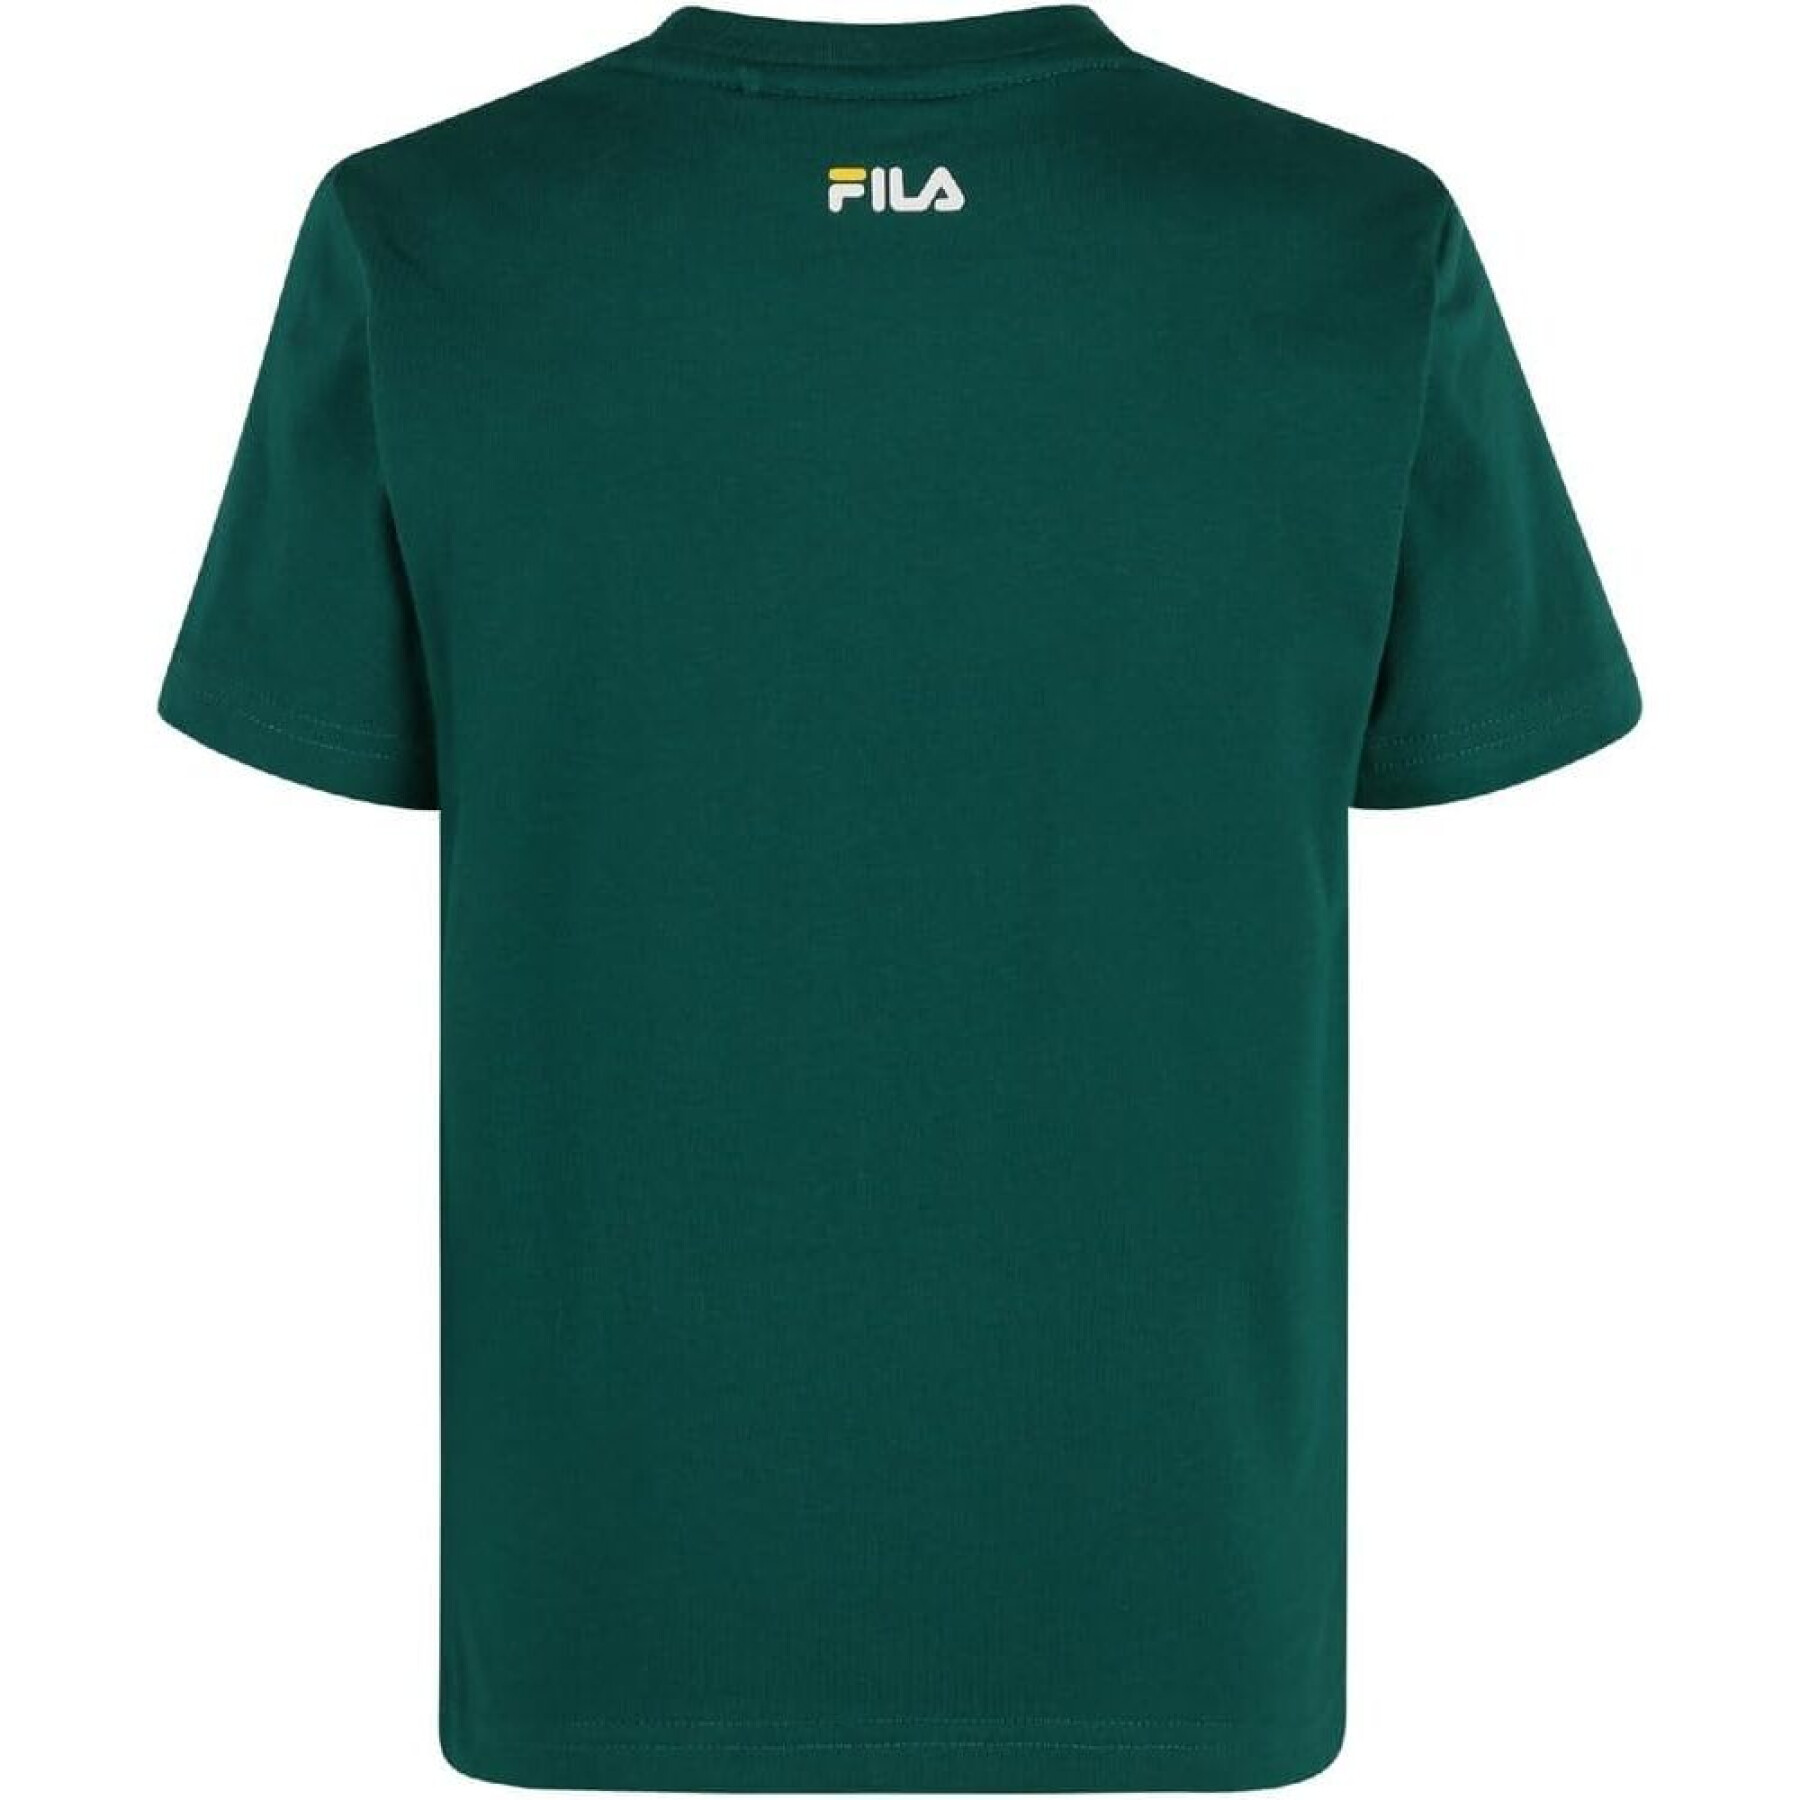 T-shirt enfant Fila Baia Mare Classic Logo